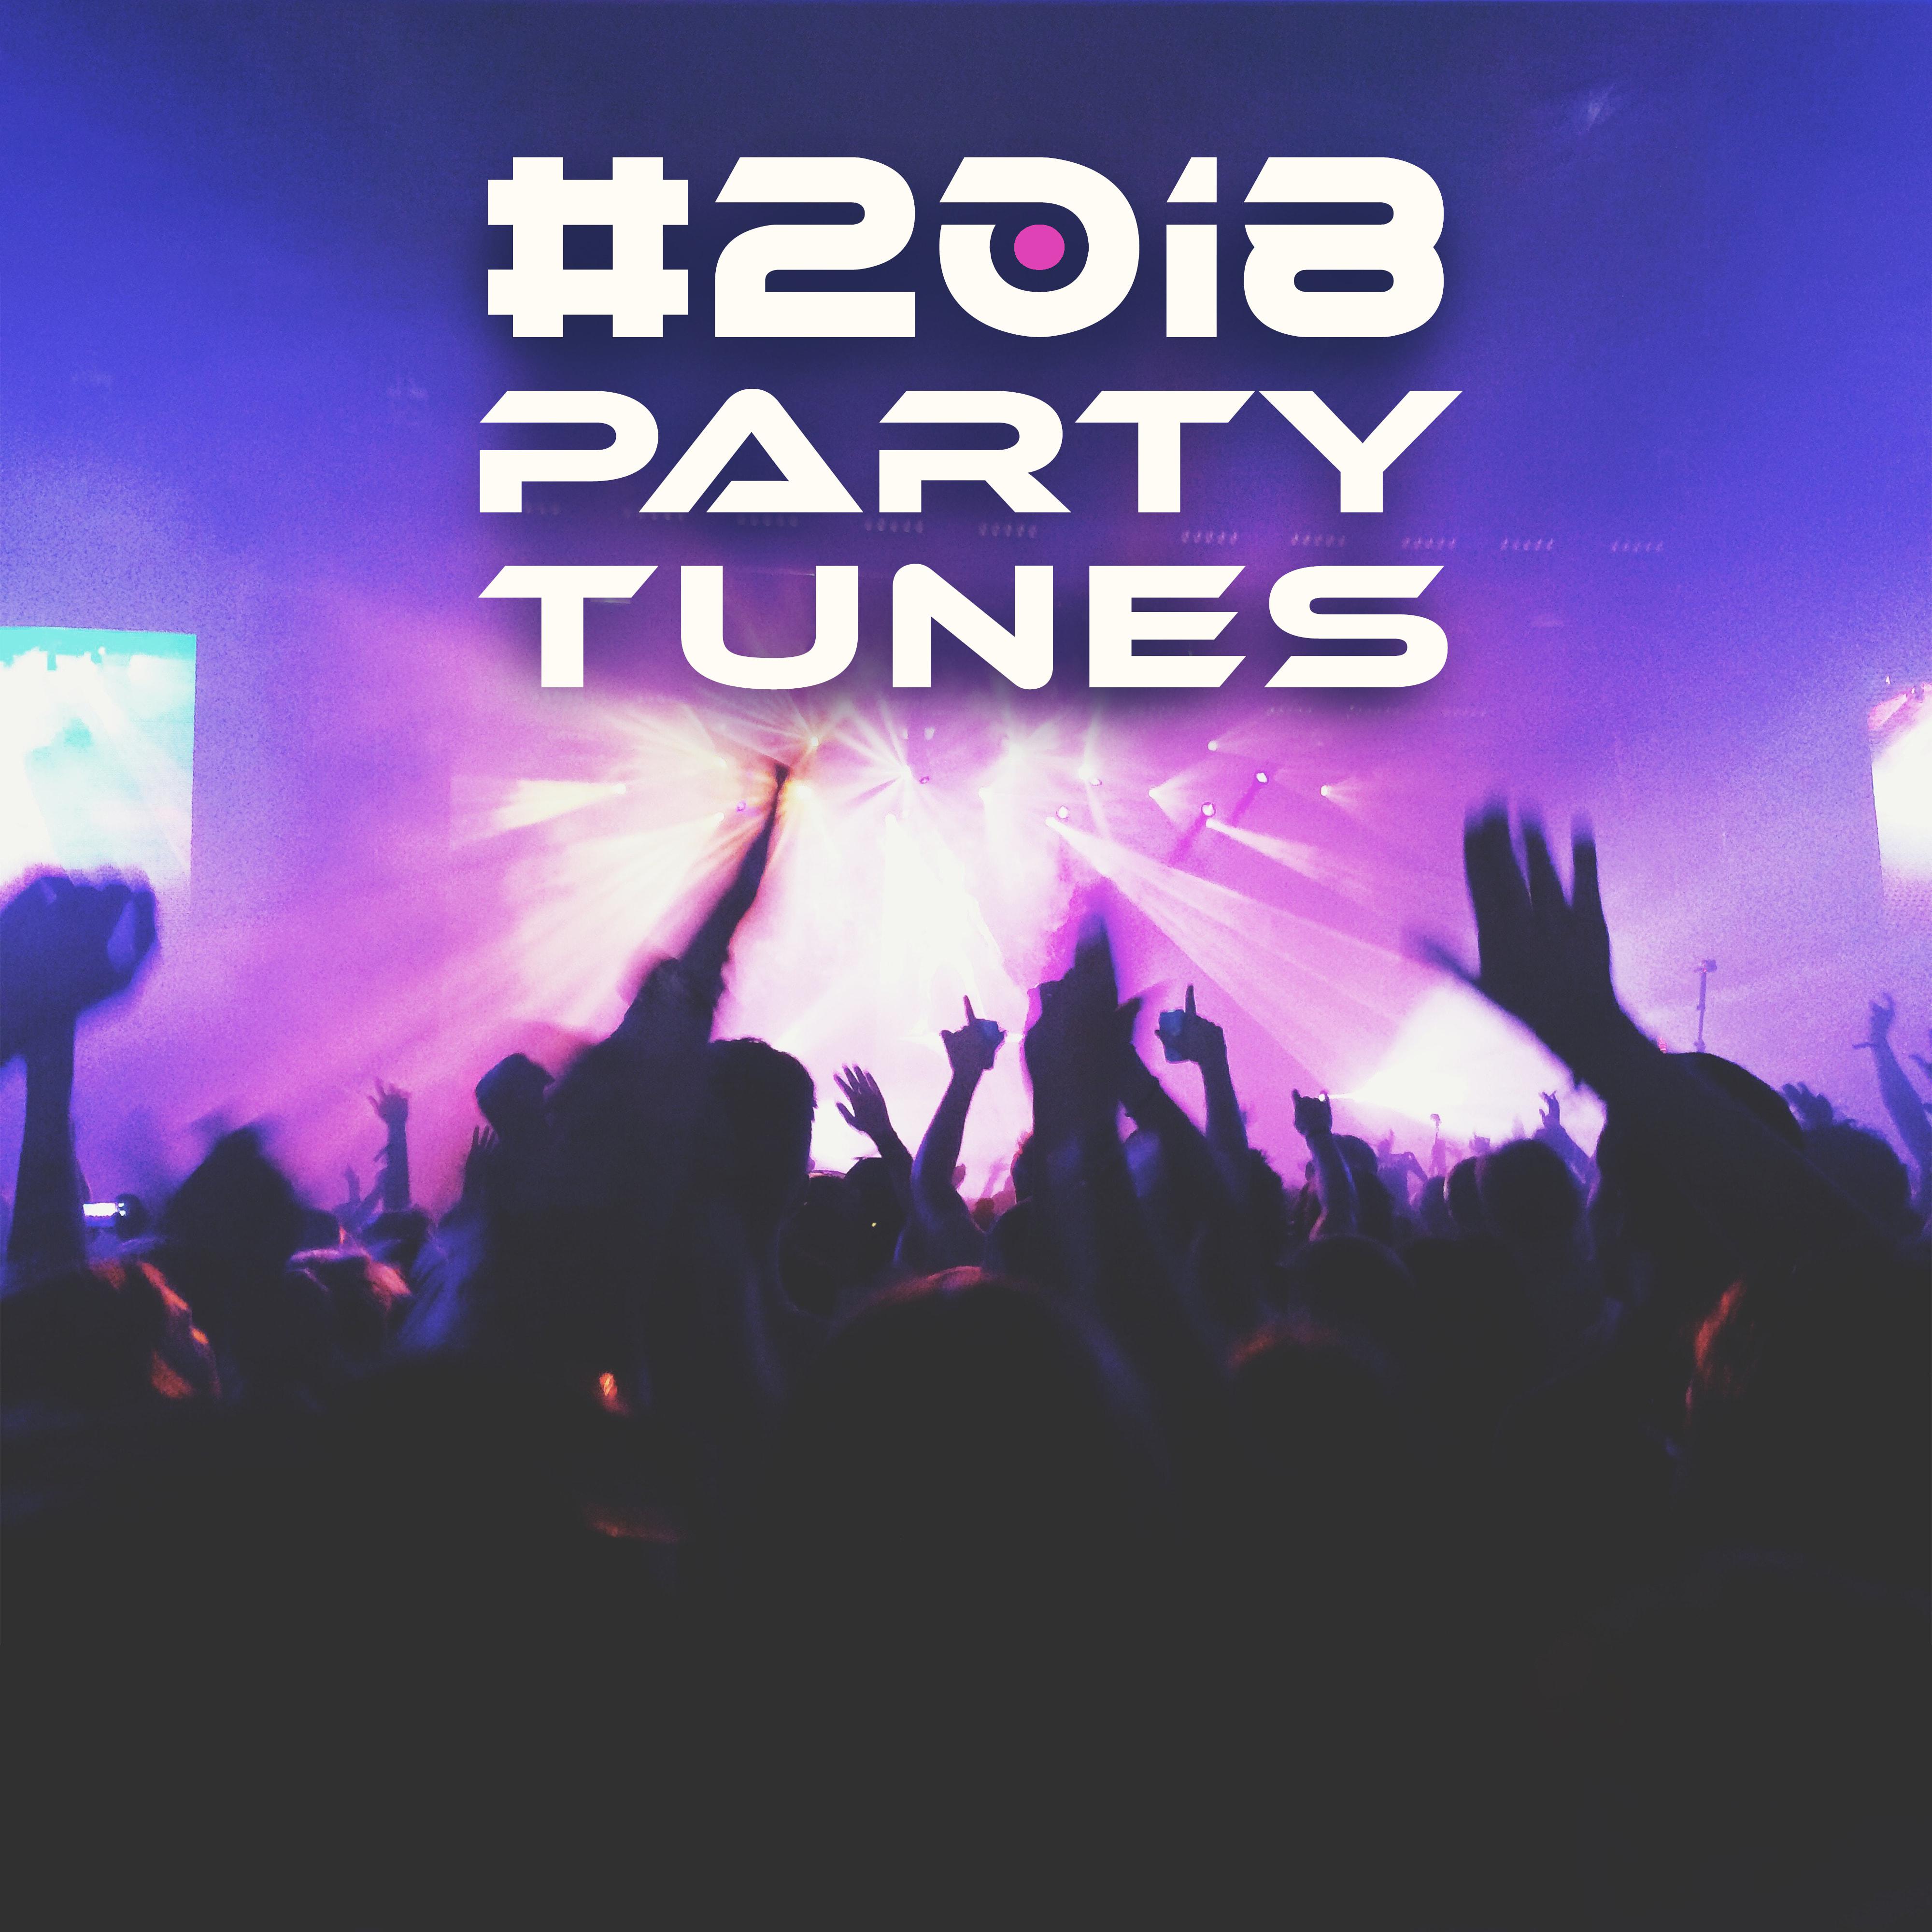 #2018 Party Tunes